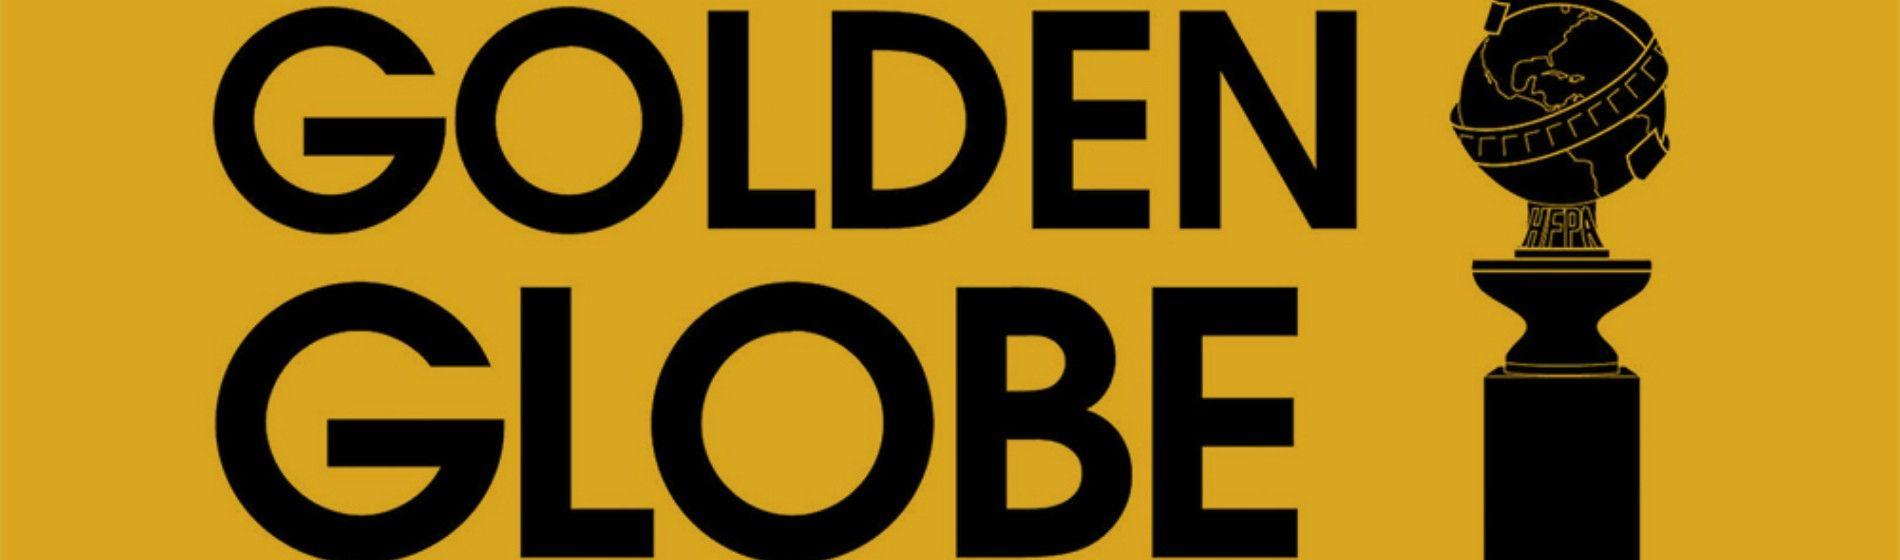 Golden Globes Logo - 2019 Golden Globes: Making Sense of the Night's Wacky Results - That ...